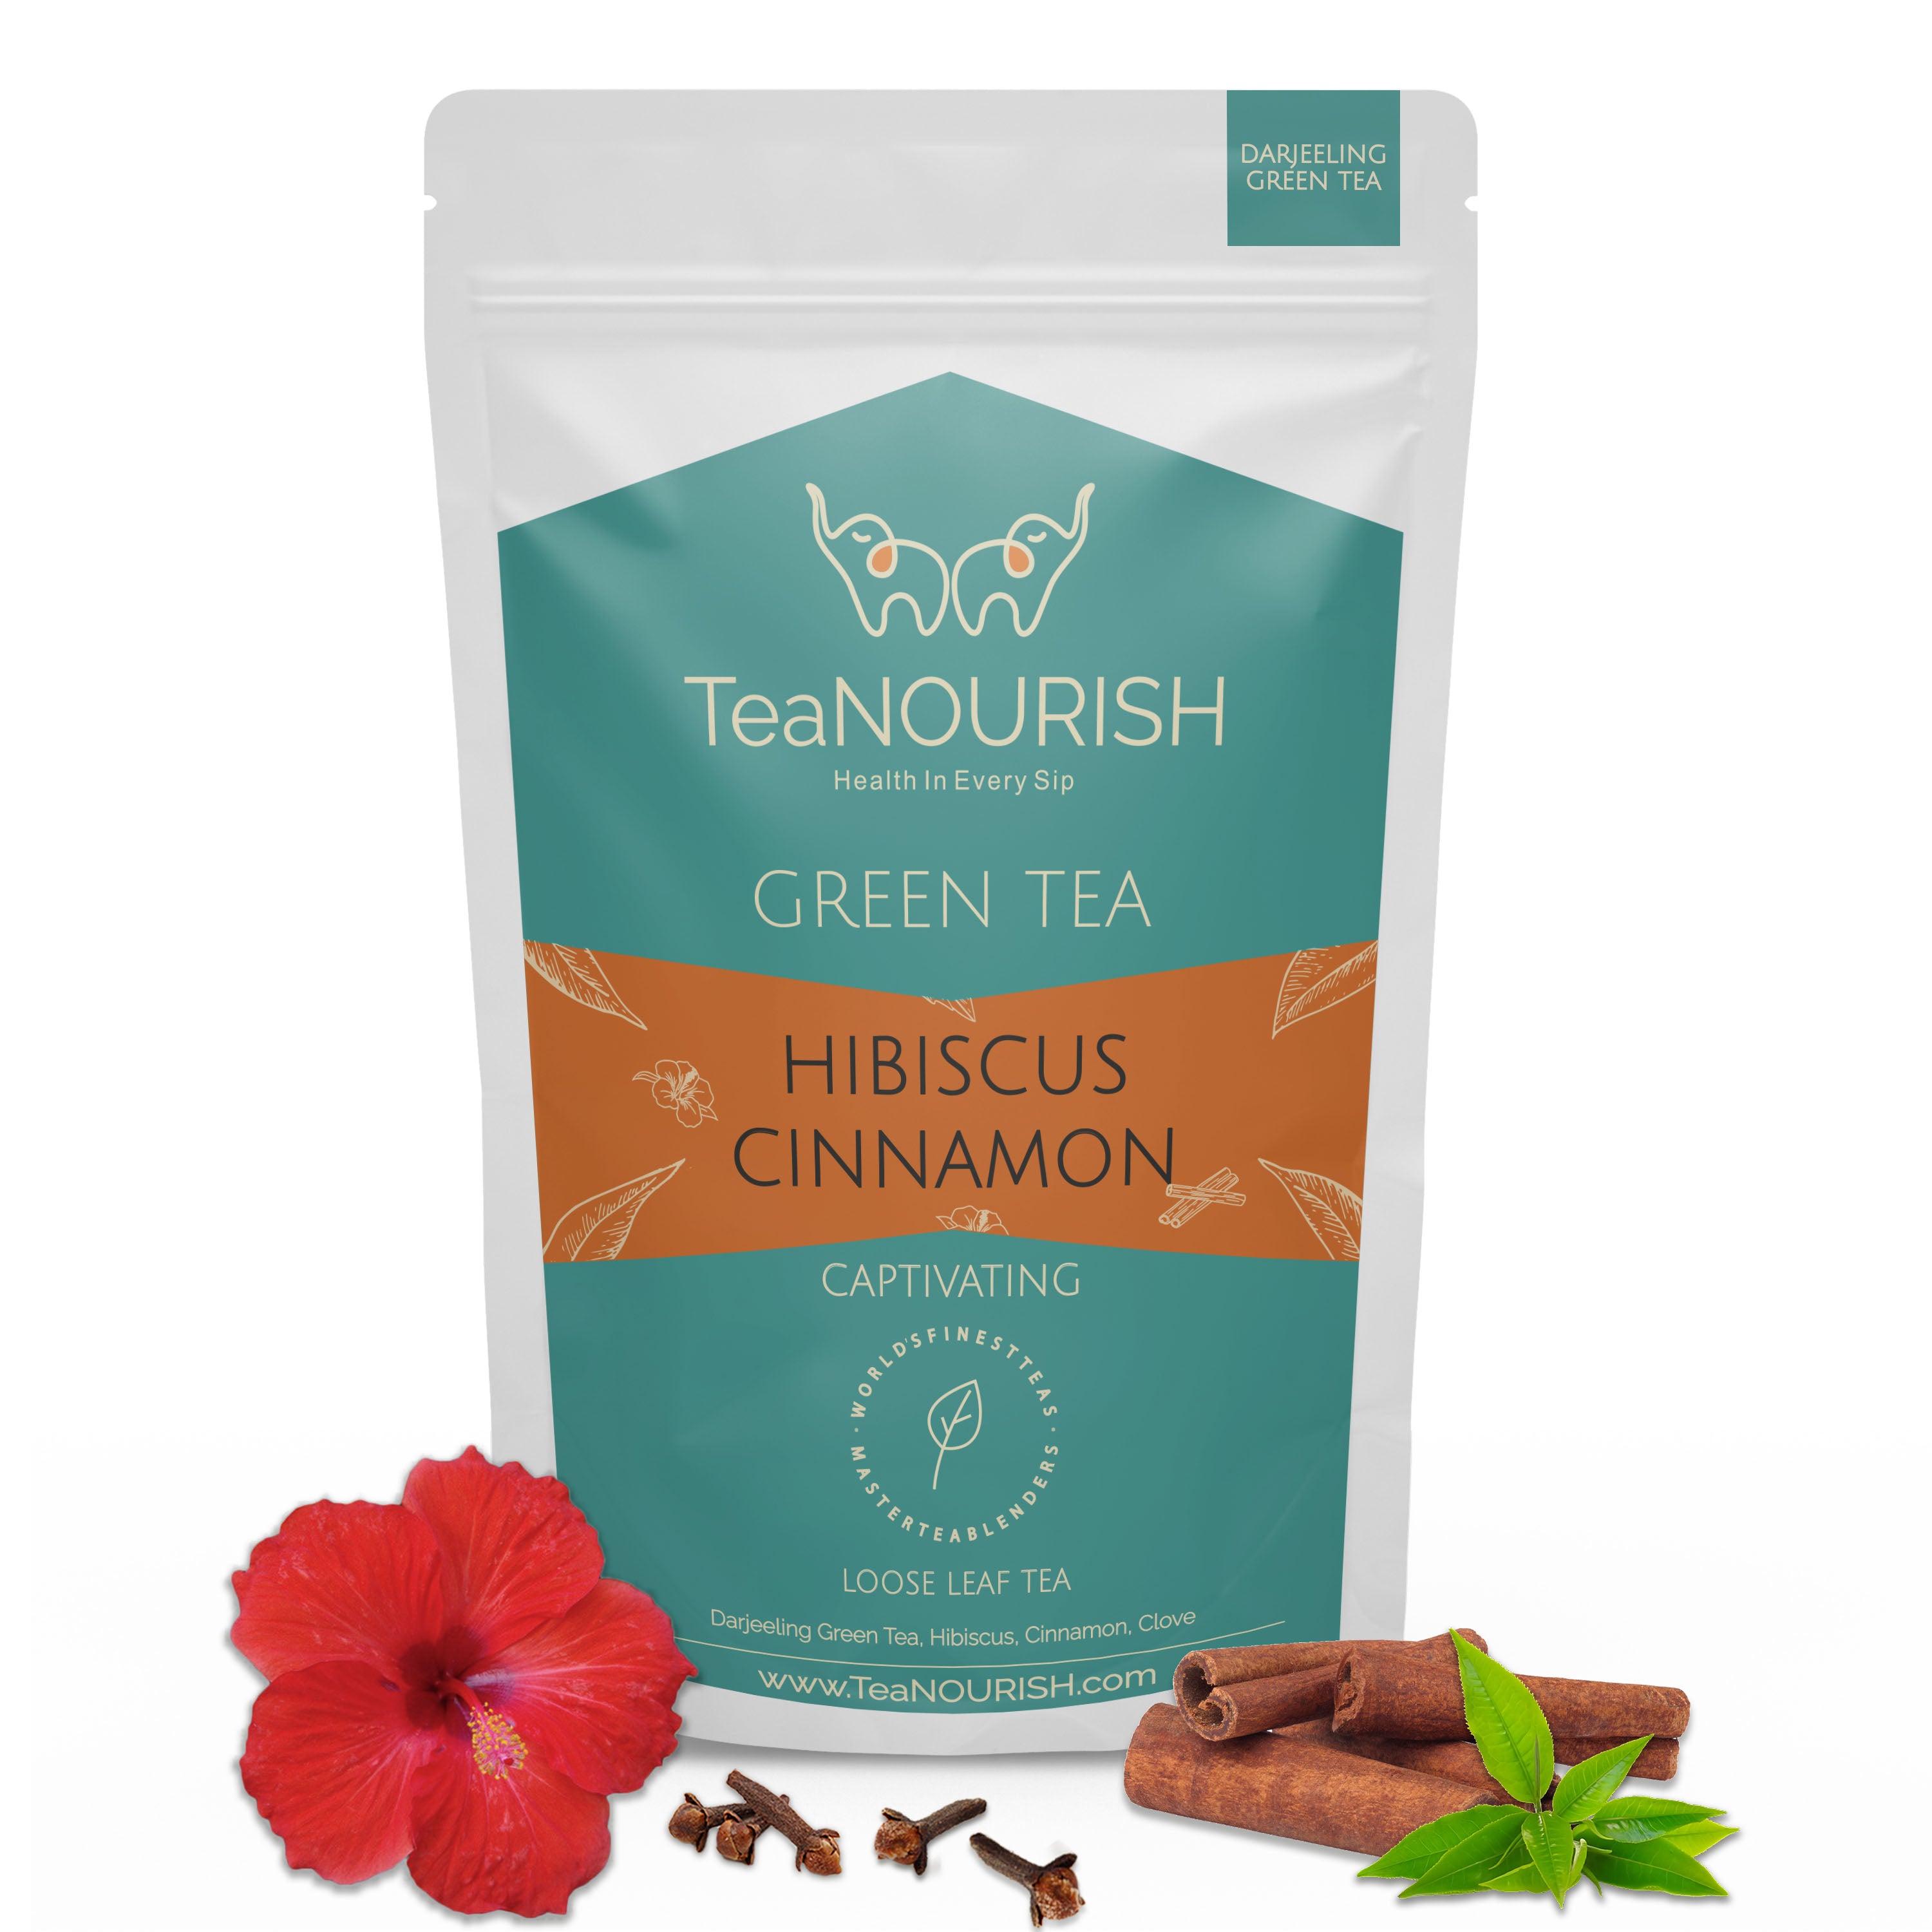 Hibiscus Cinnamon Green Tea Product Picture